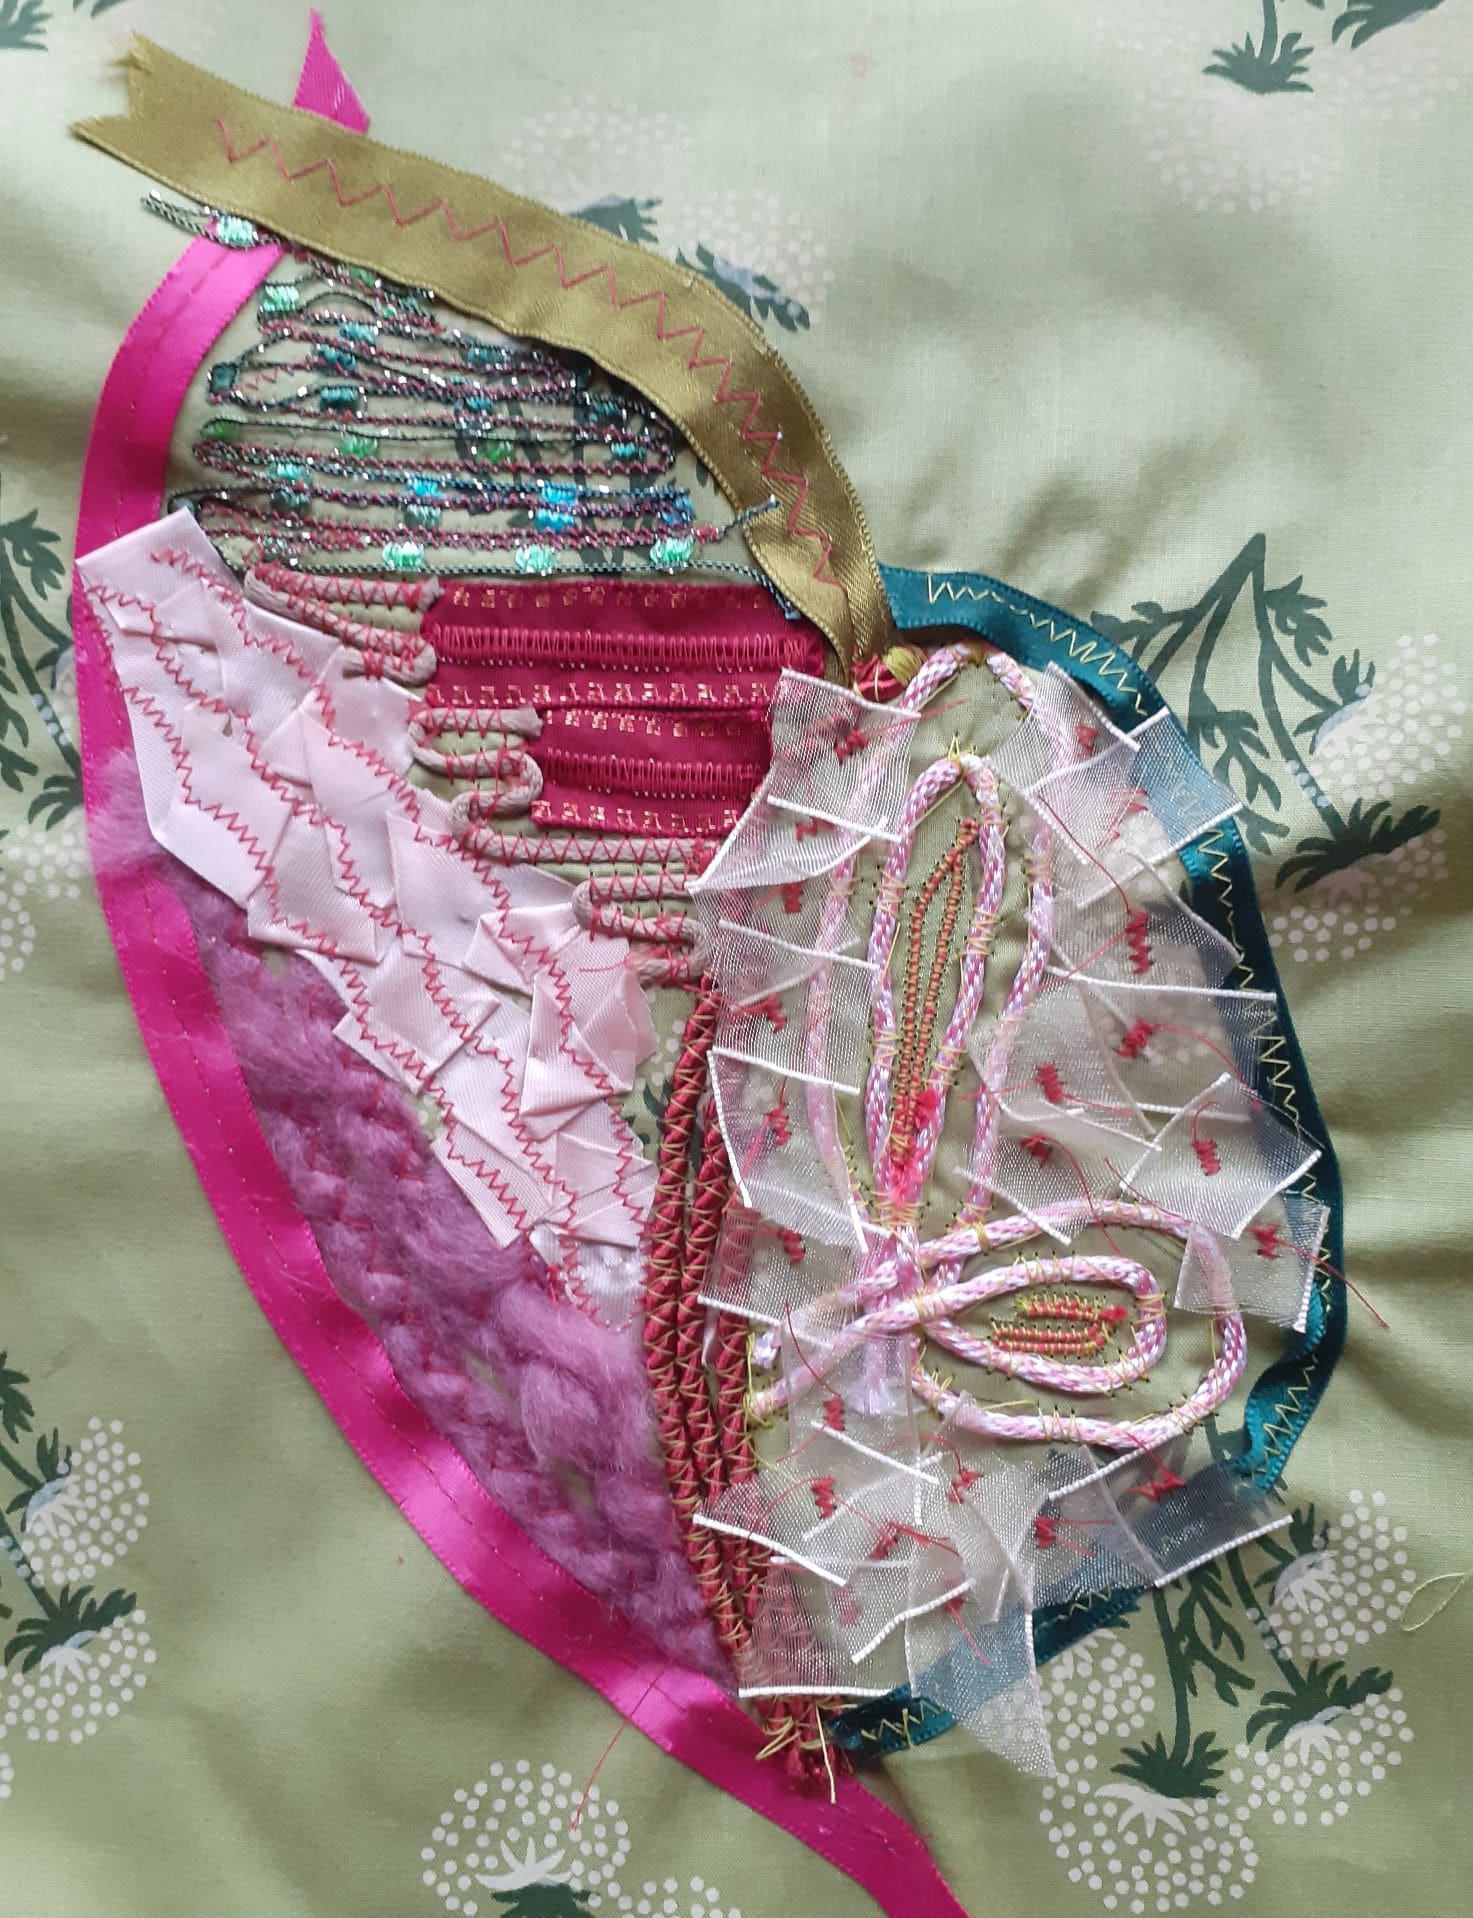 Graduate Story: Vanessa Thorpe - Textiles | School of Stitched Textiles